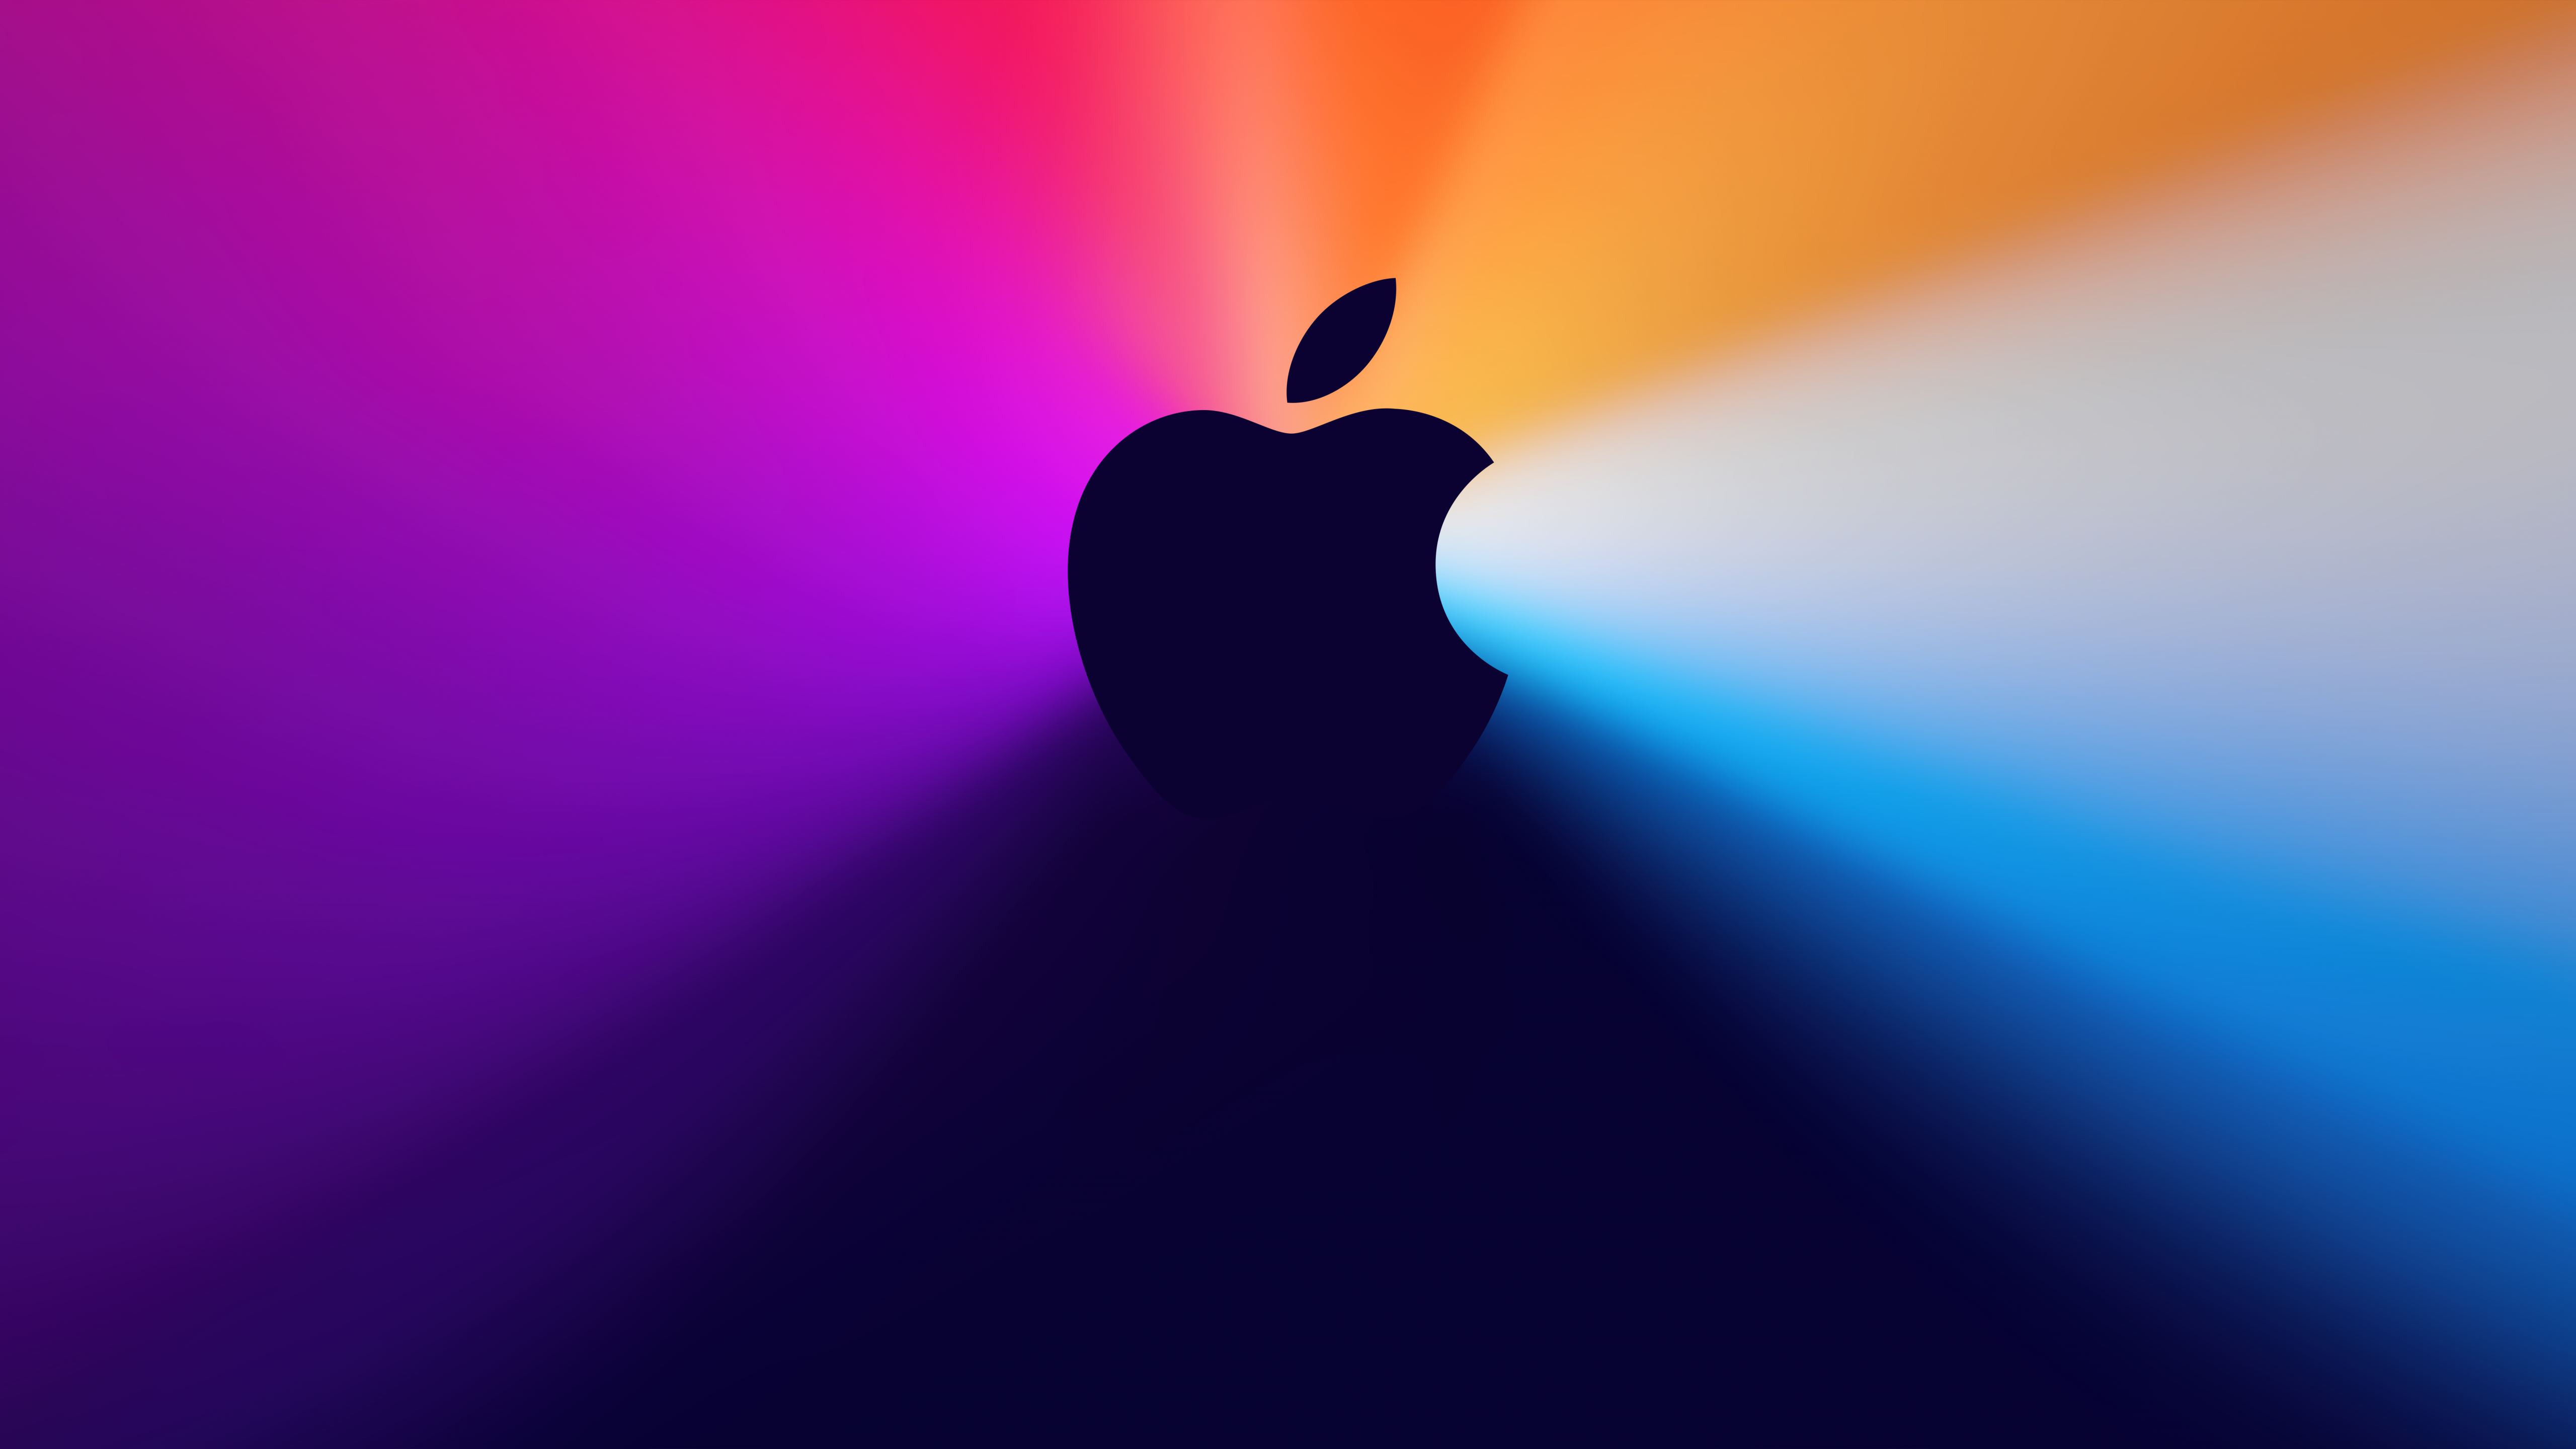 One more thing Wallpaper 4K, Apple logo, Technology, #3161